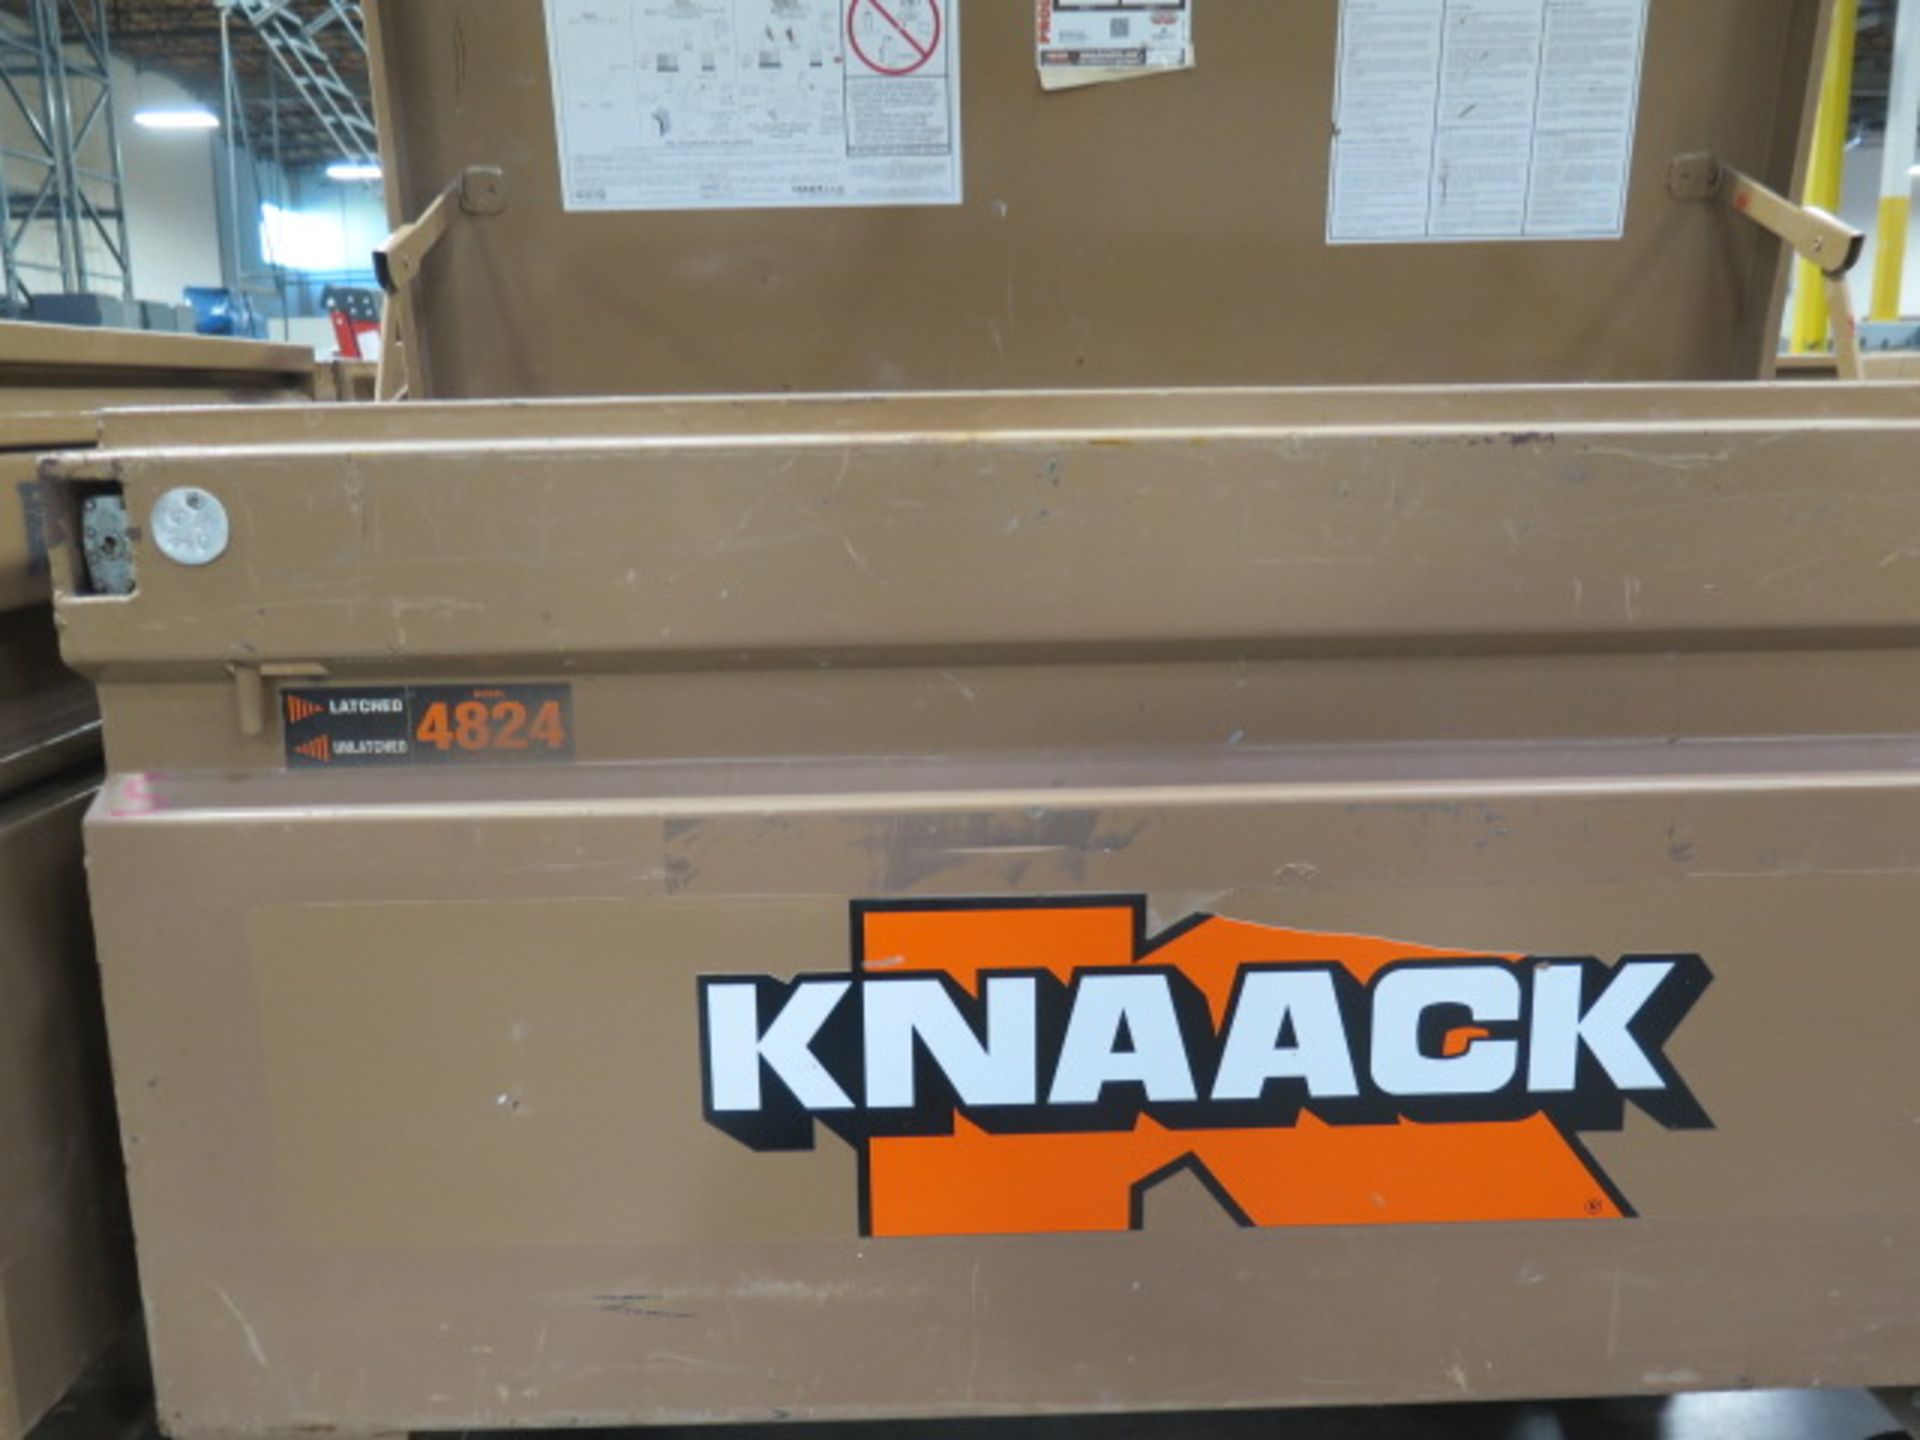 Knaack mdl. 4824 Rolling Job Box (SOLD AS-IS - NO WARRANTY) - Image 5 of 6